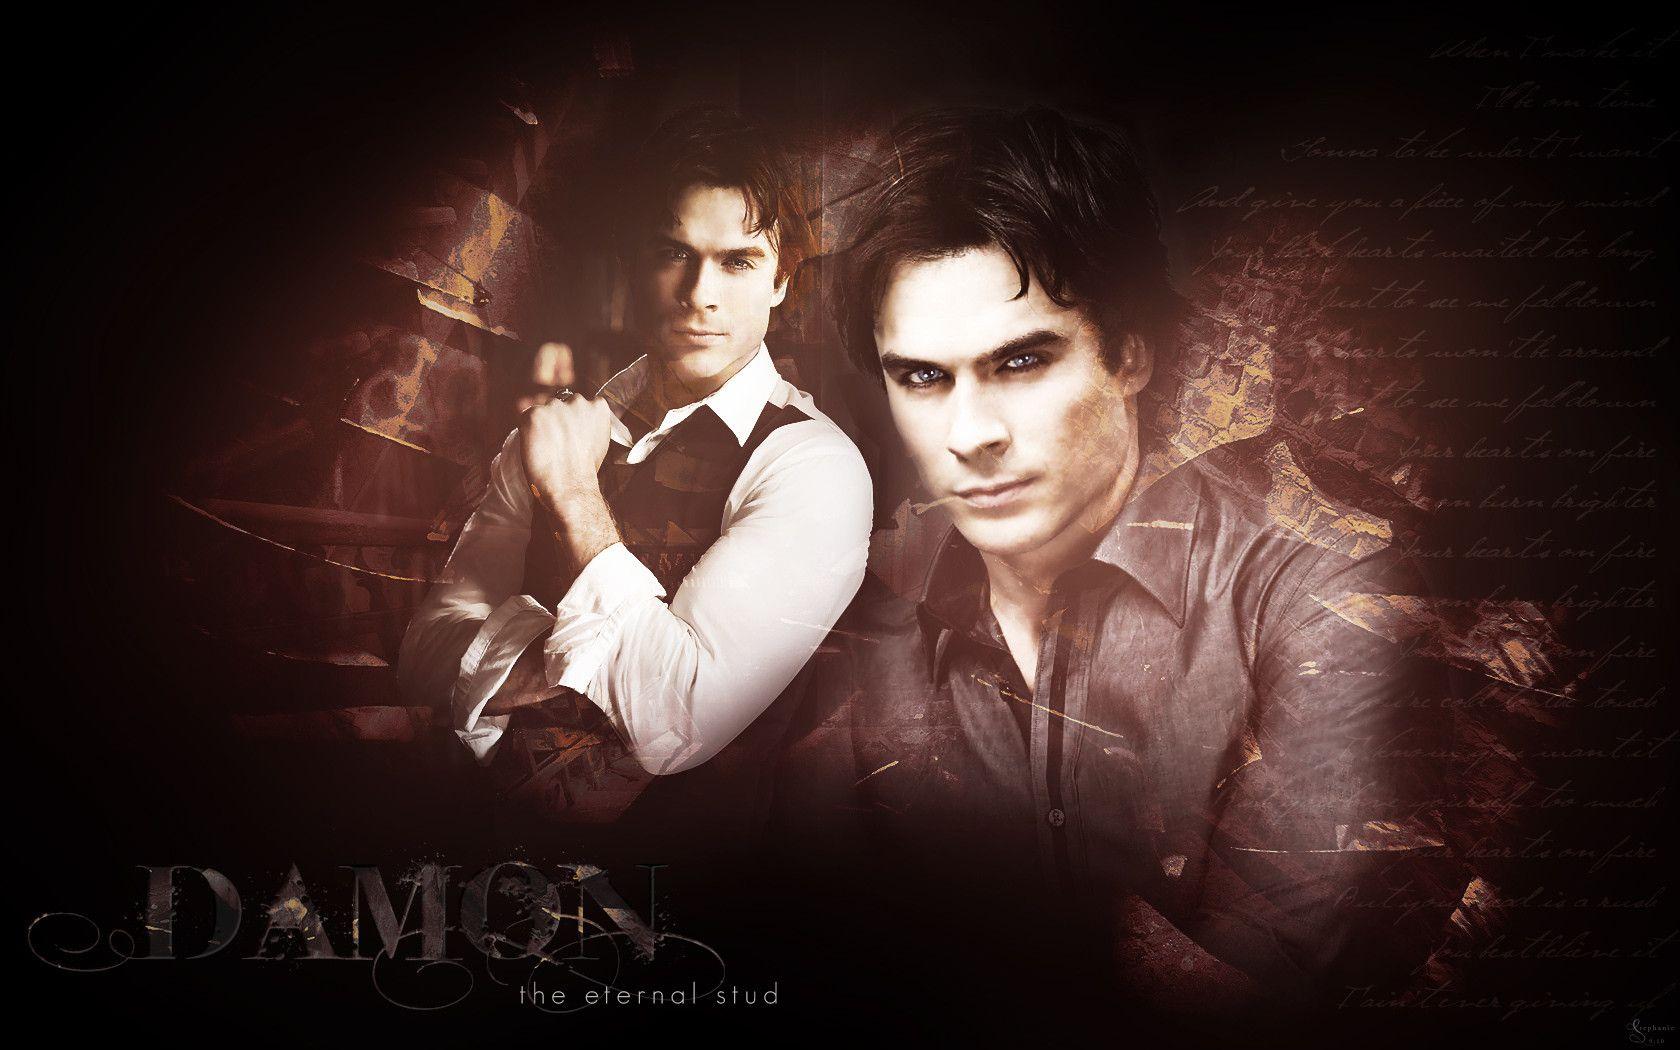 Damon Vampire Diaries TV Show Wallpaper